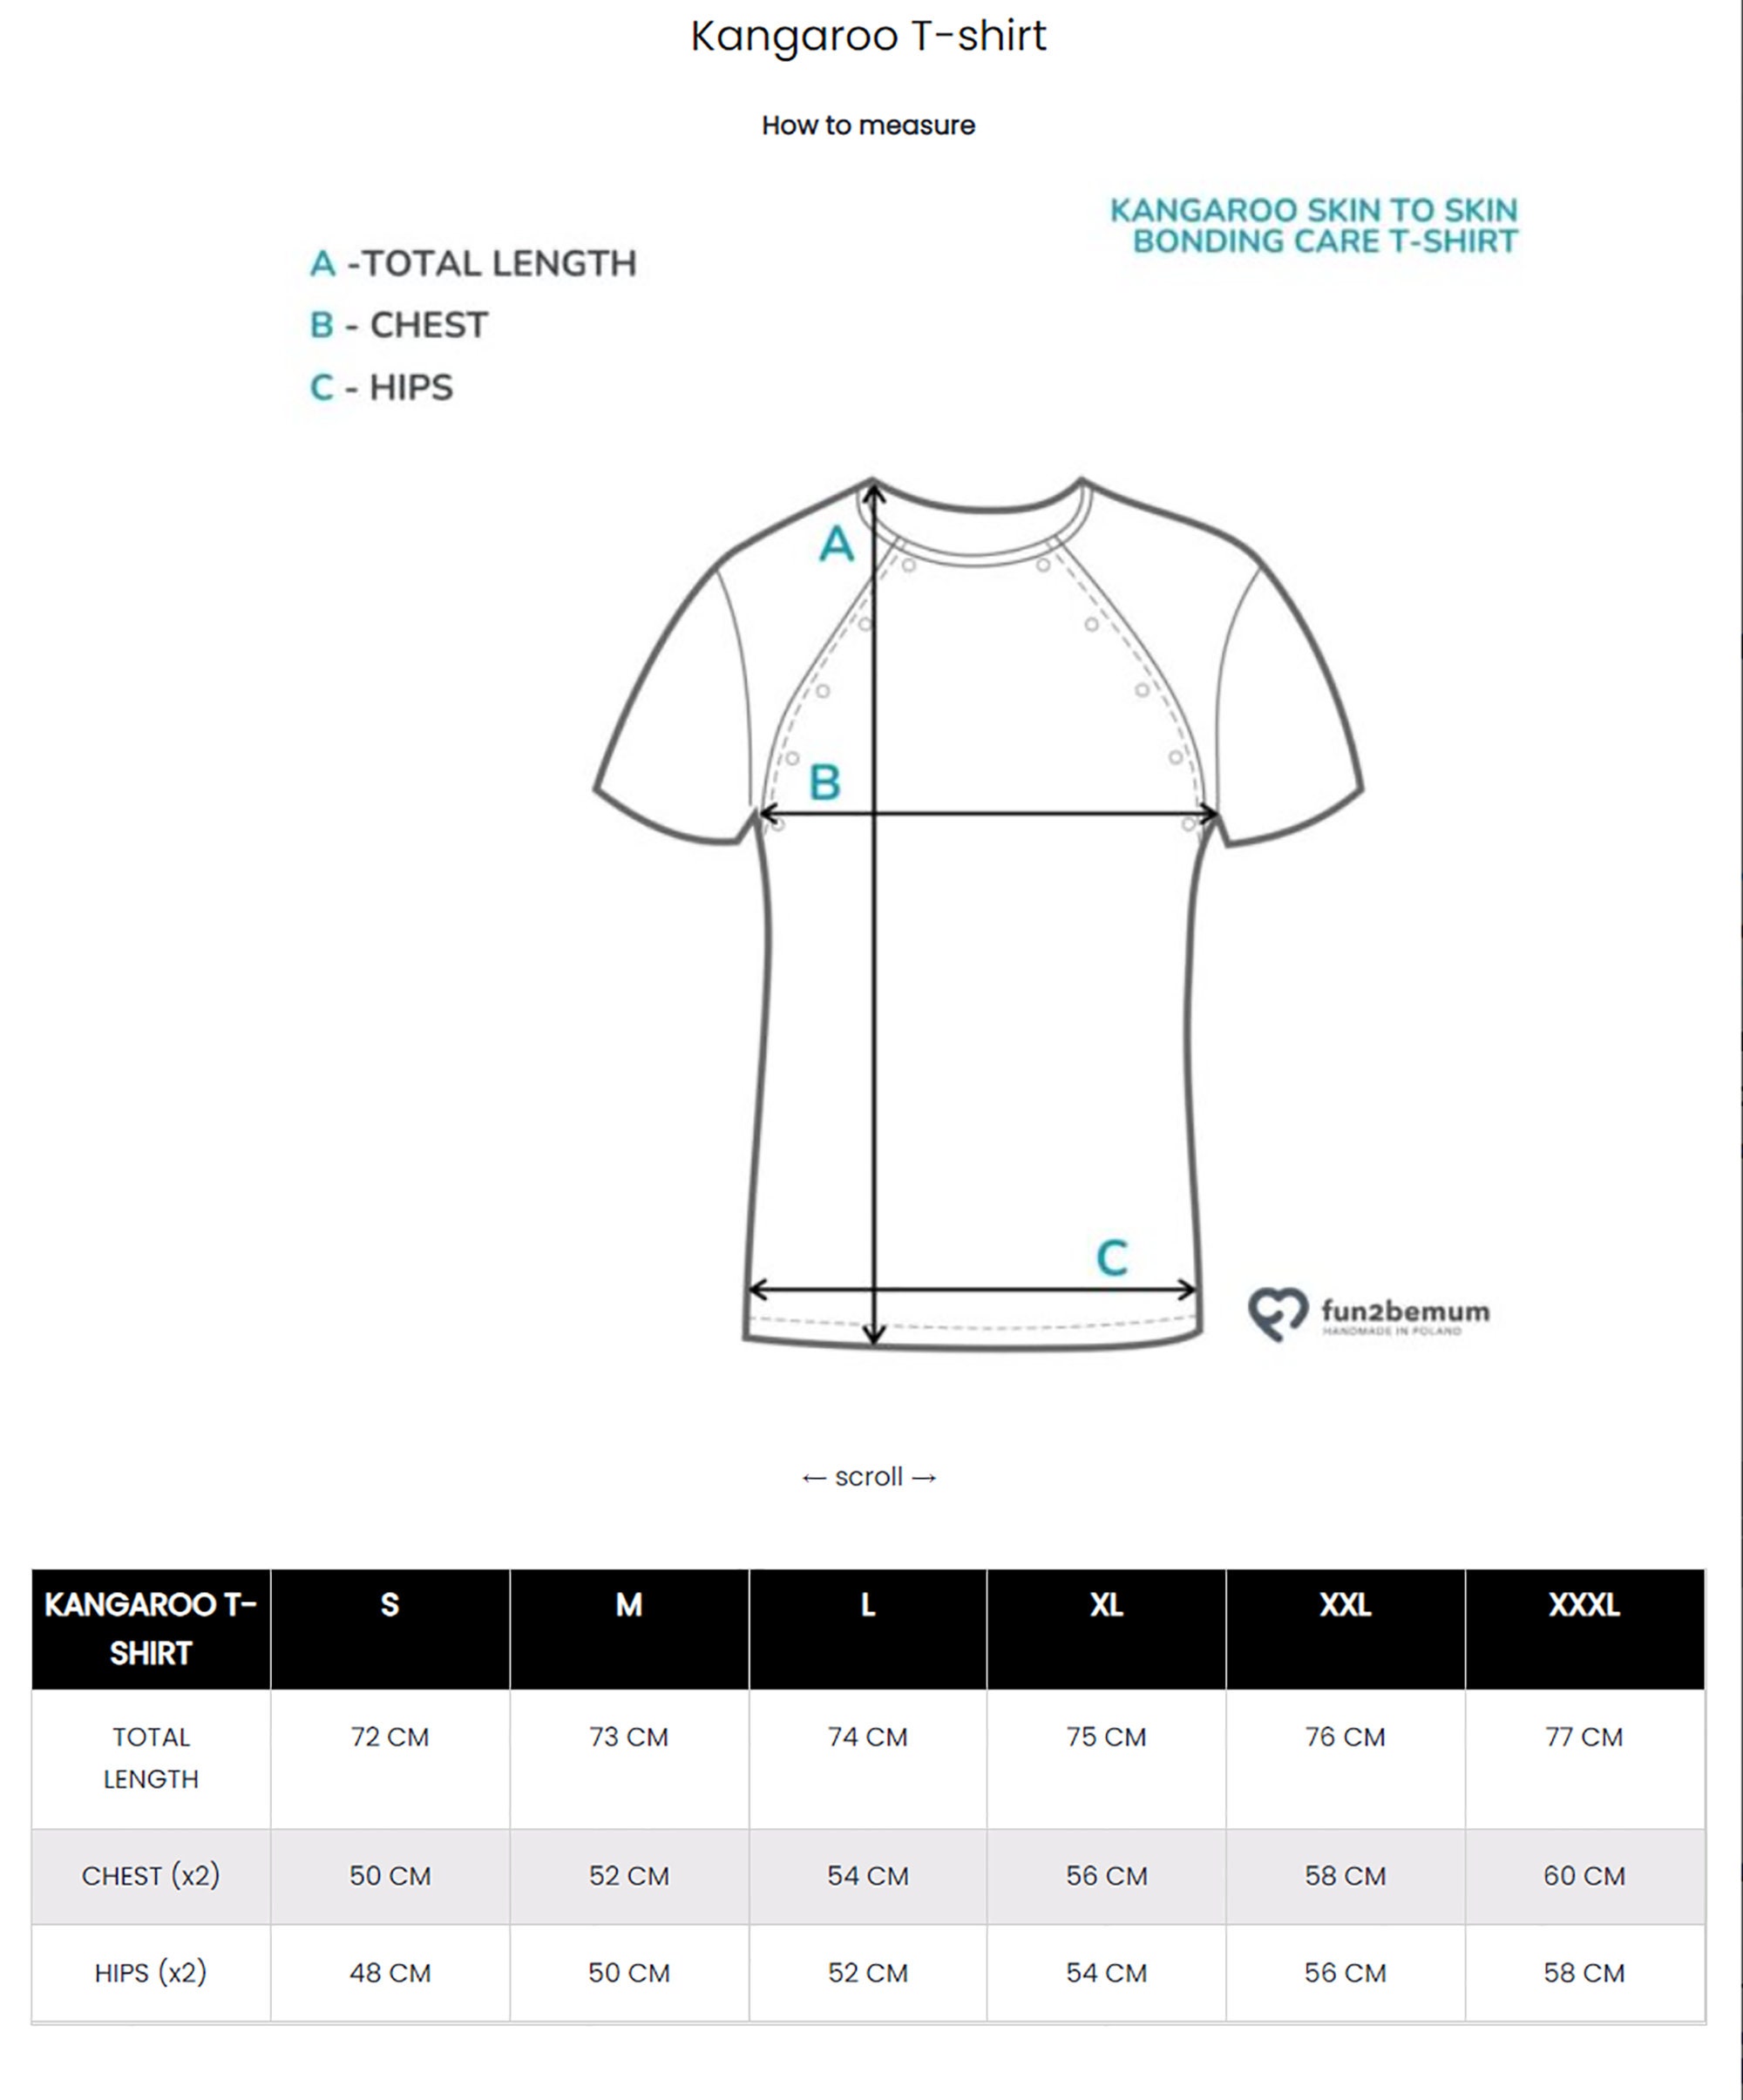 Unisex Kid/Youth T Shirts Ro-blox 3D Print Short Sleeve Tee for Boys & Girls  Black (130): Buy Online at Best Price in UAE 